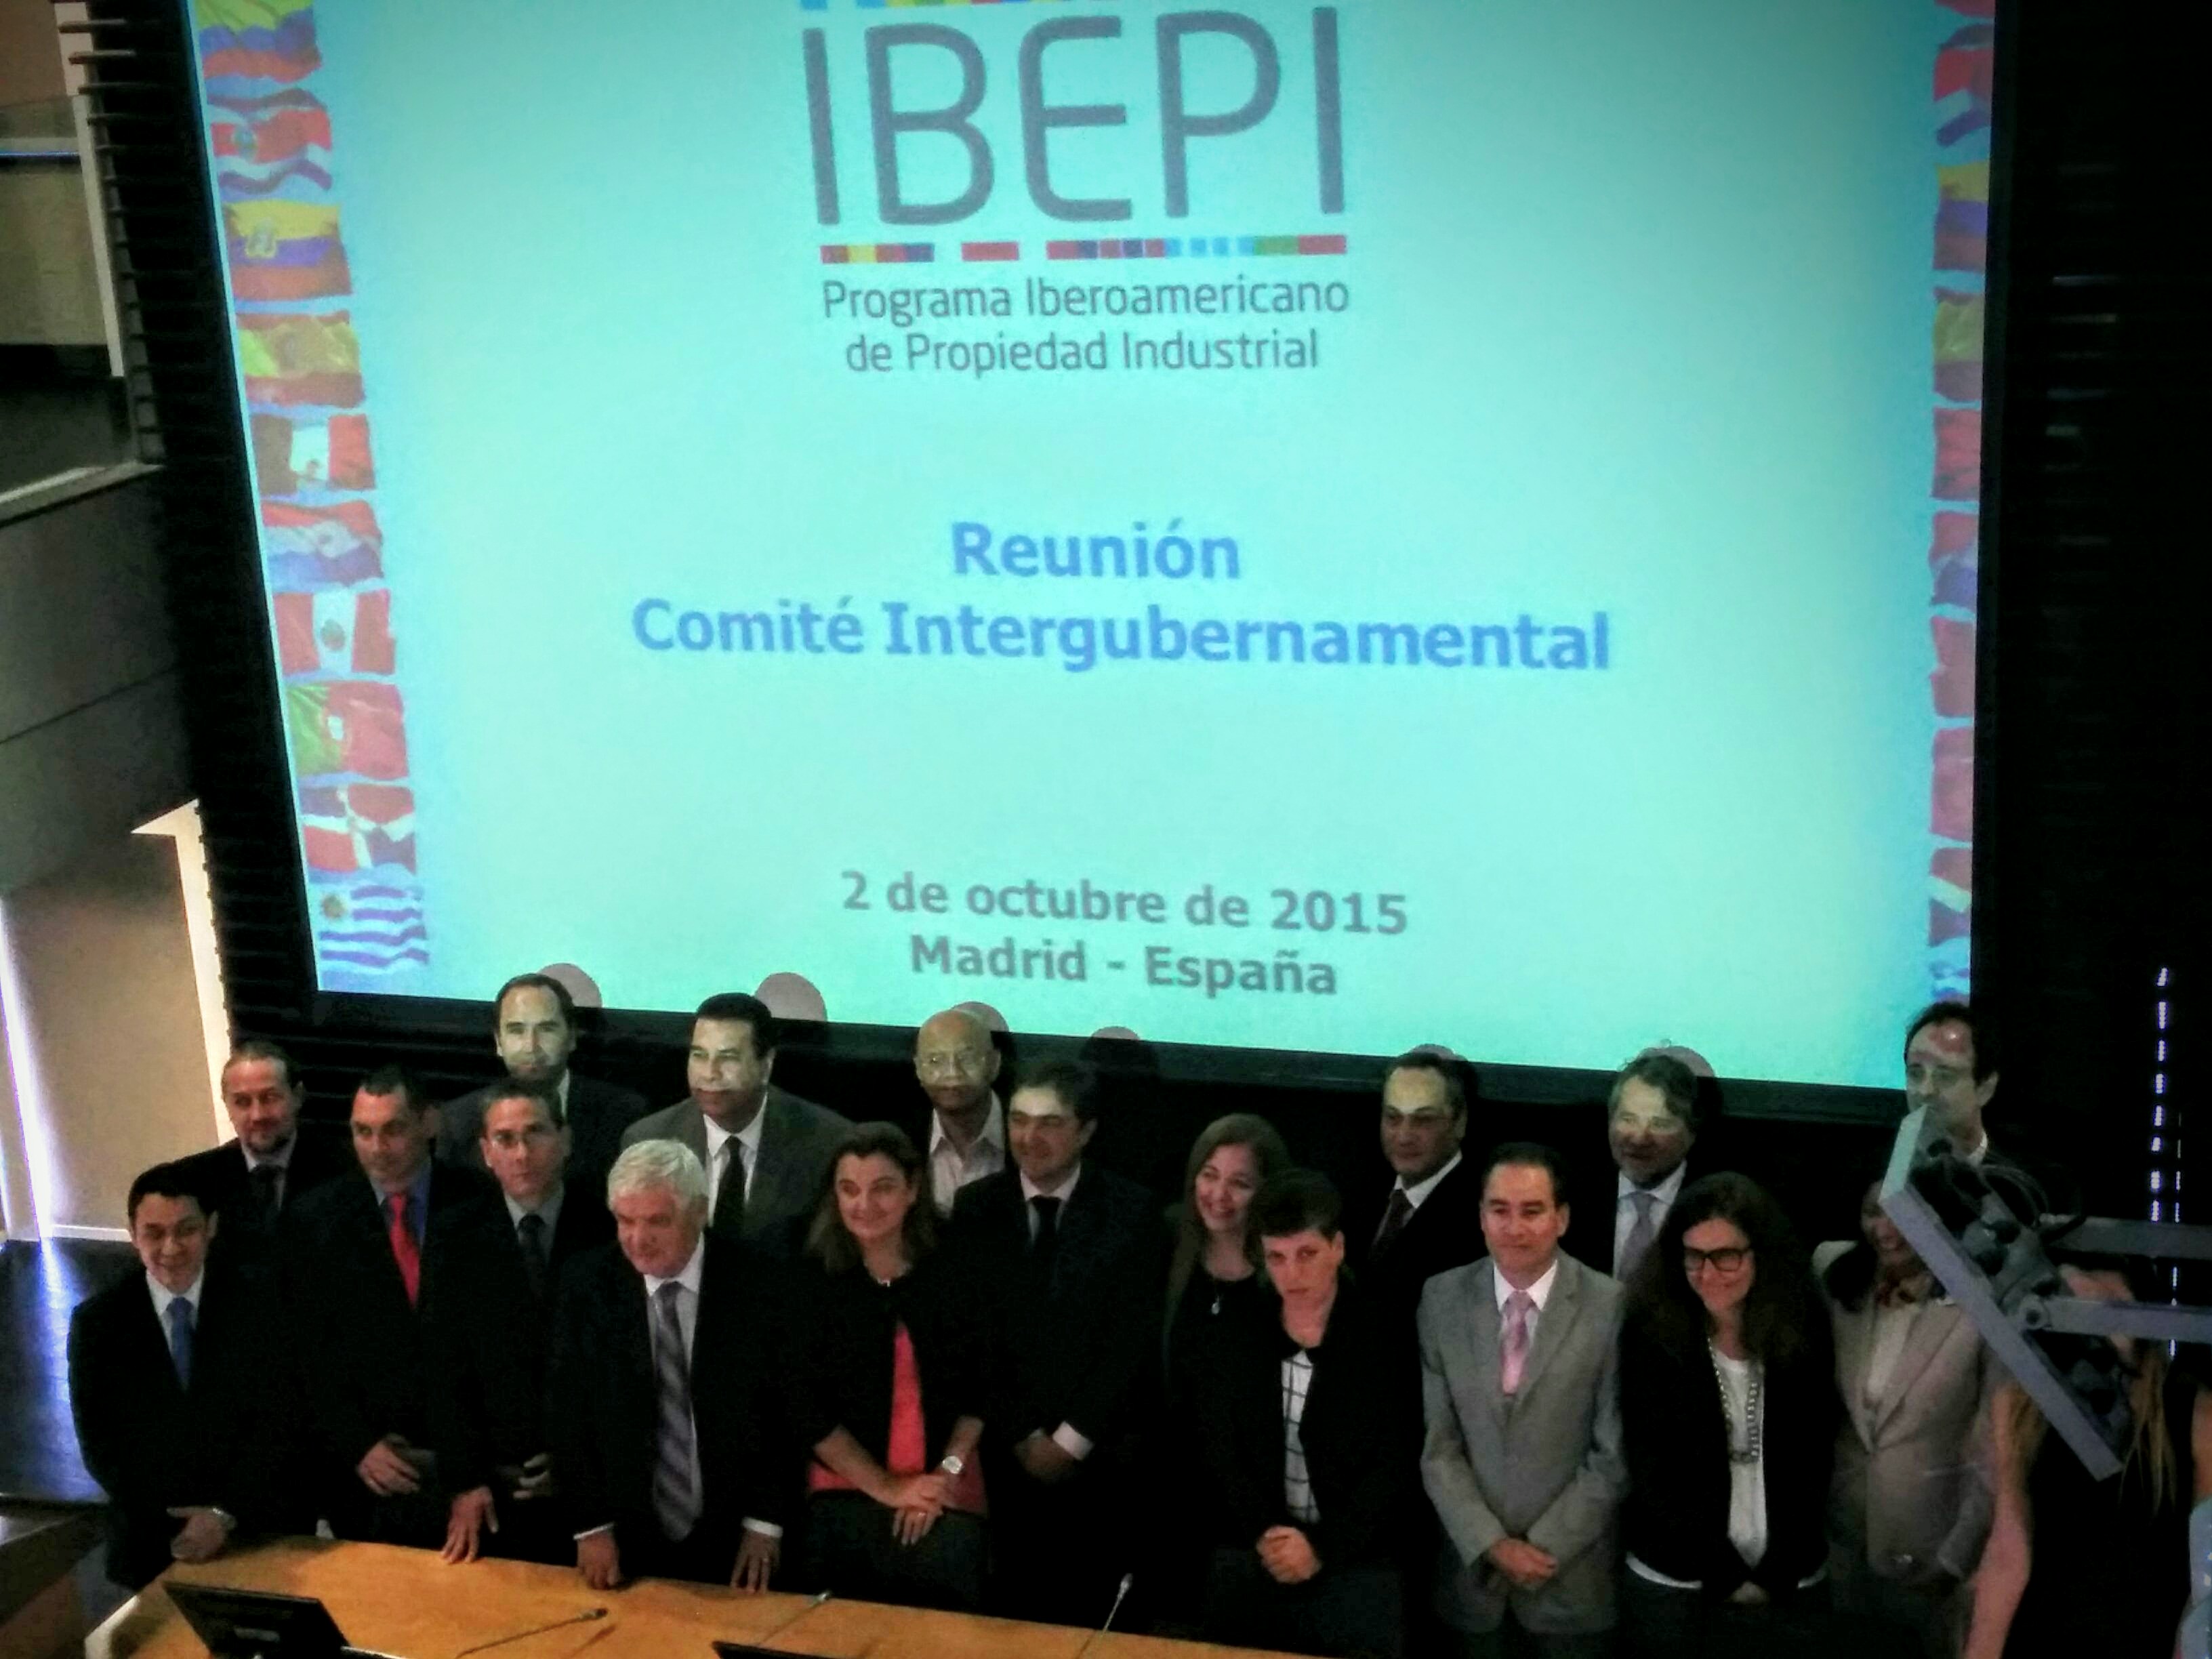 Reunión de IBEPI en Madrid